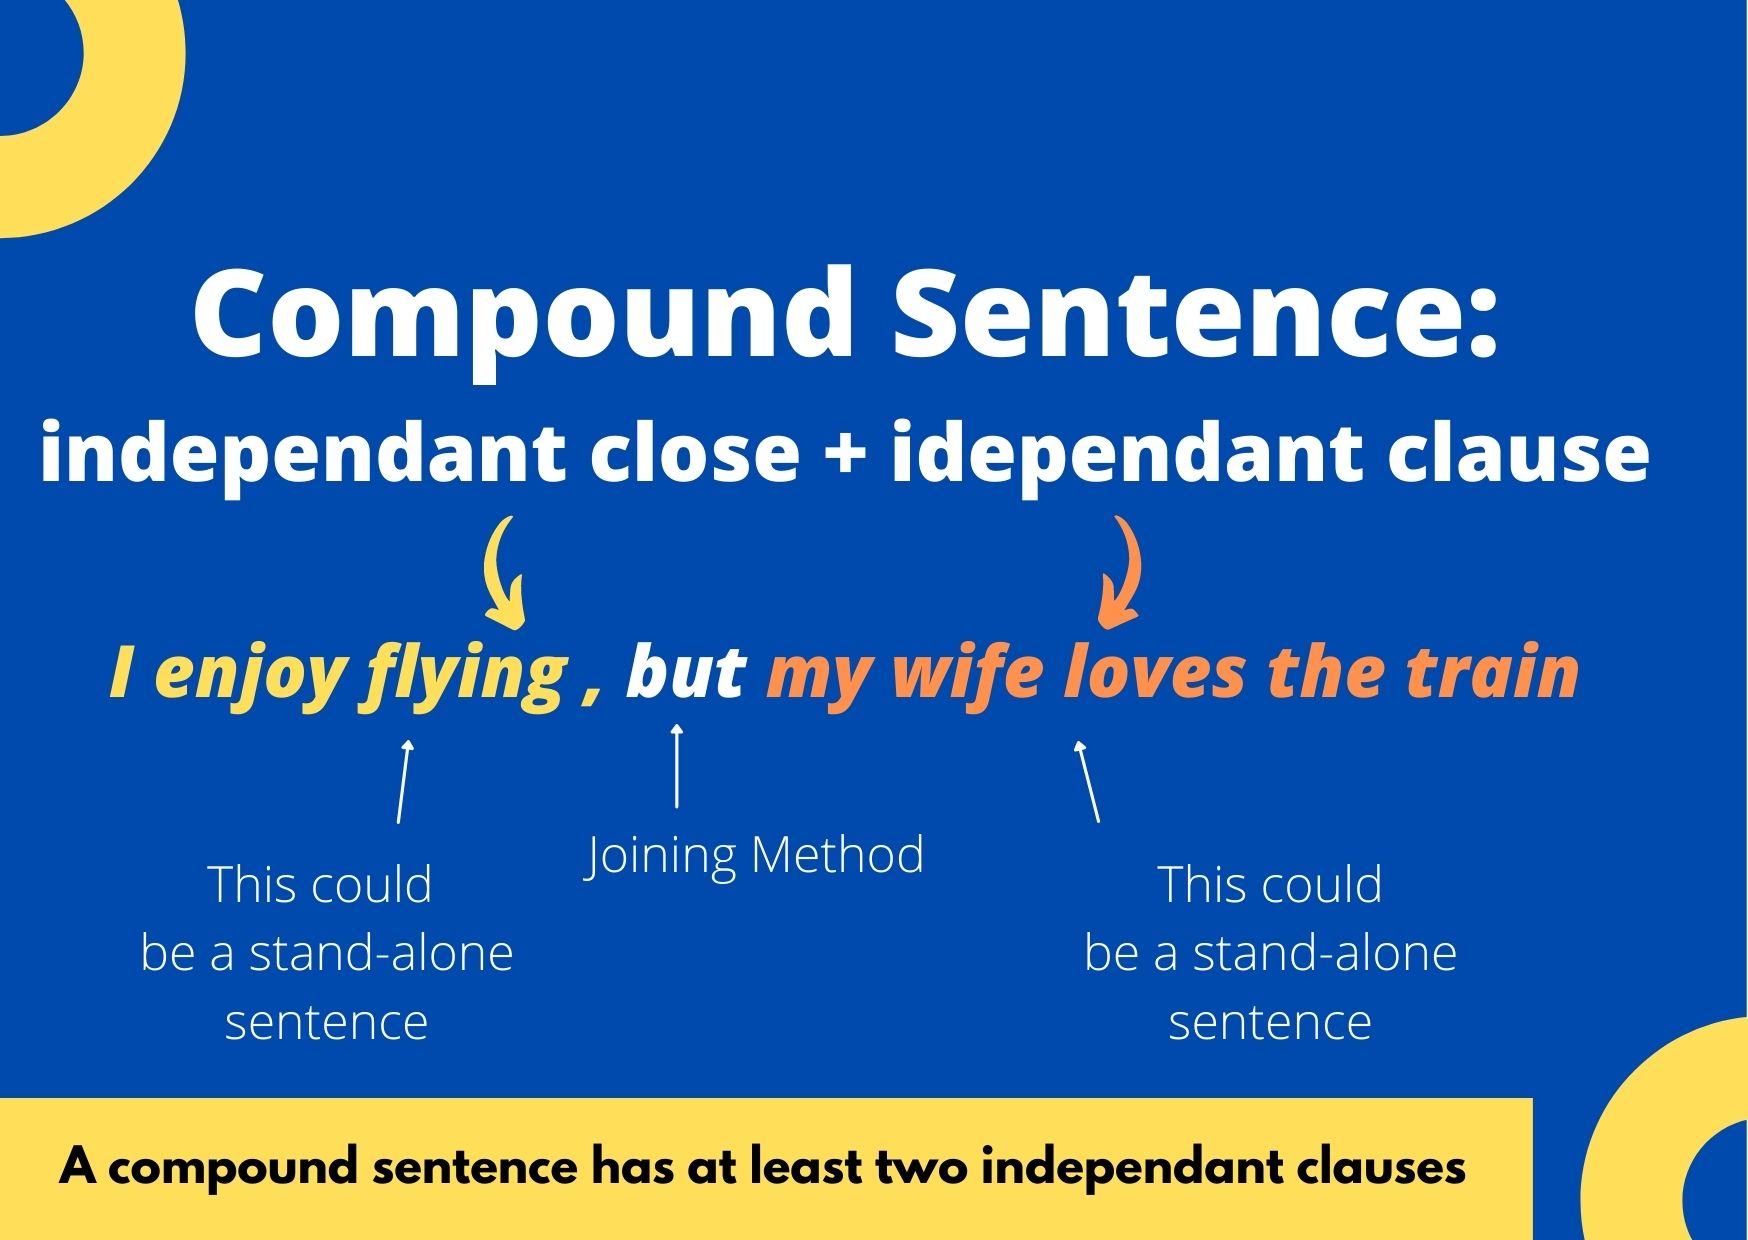 A description and an example of a compound sentence